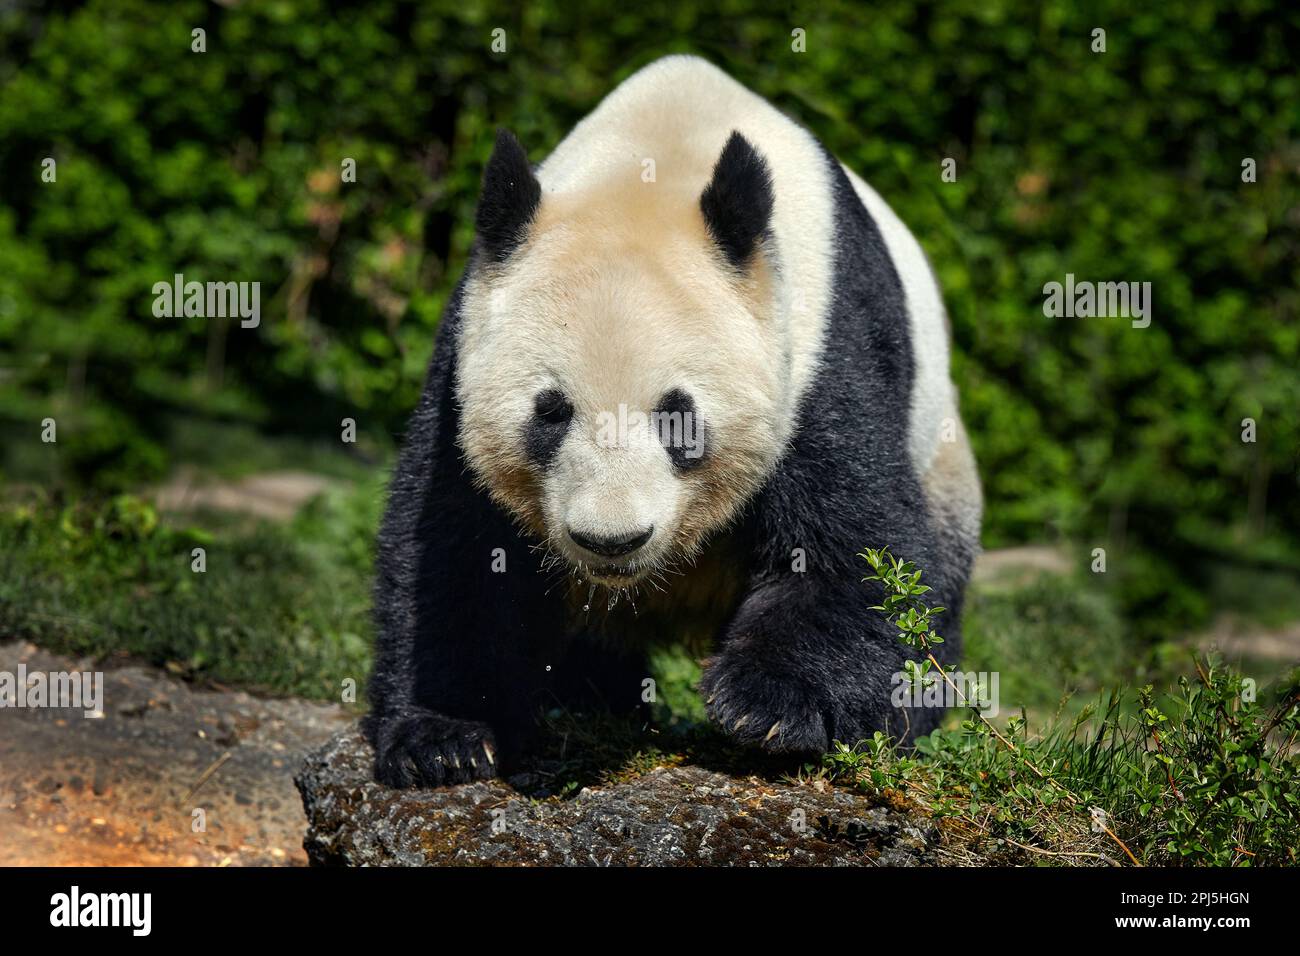 Panda bear behaviour in the nature habitat. Portrait of Giant Panda, Ailuropoda melanoleuca, feeding on bamboo tree in green vegetation. Detail portra Stock Photo